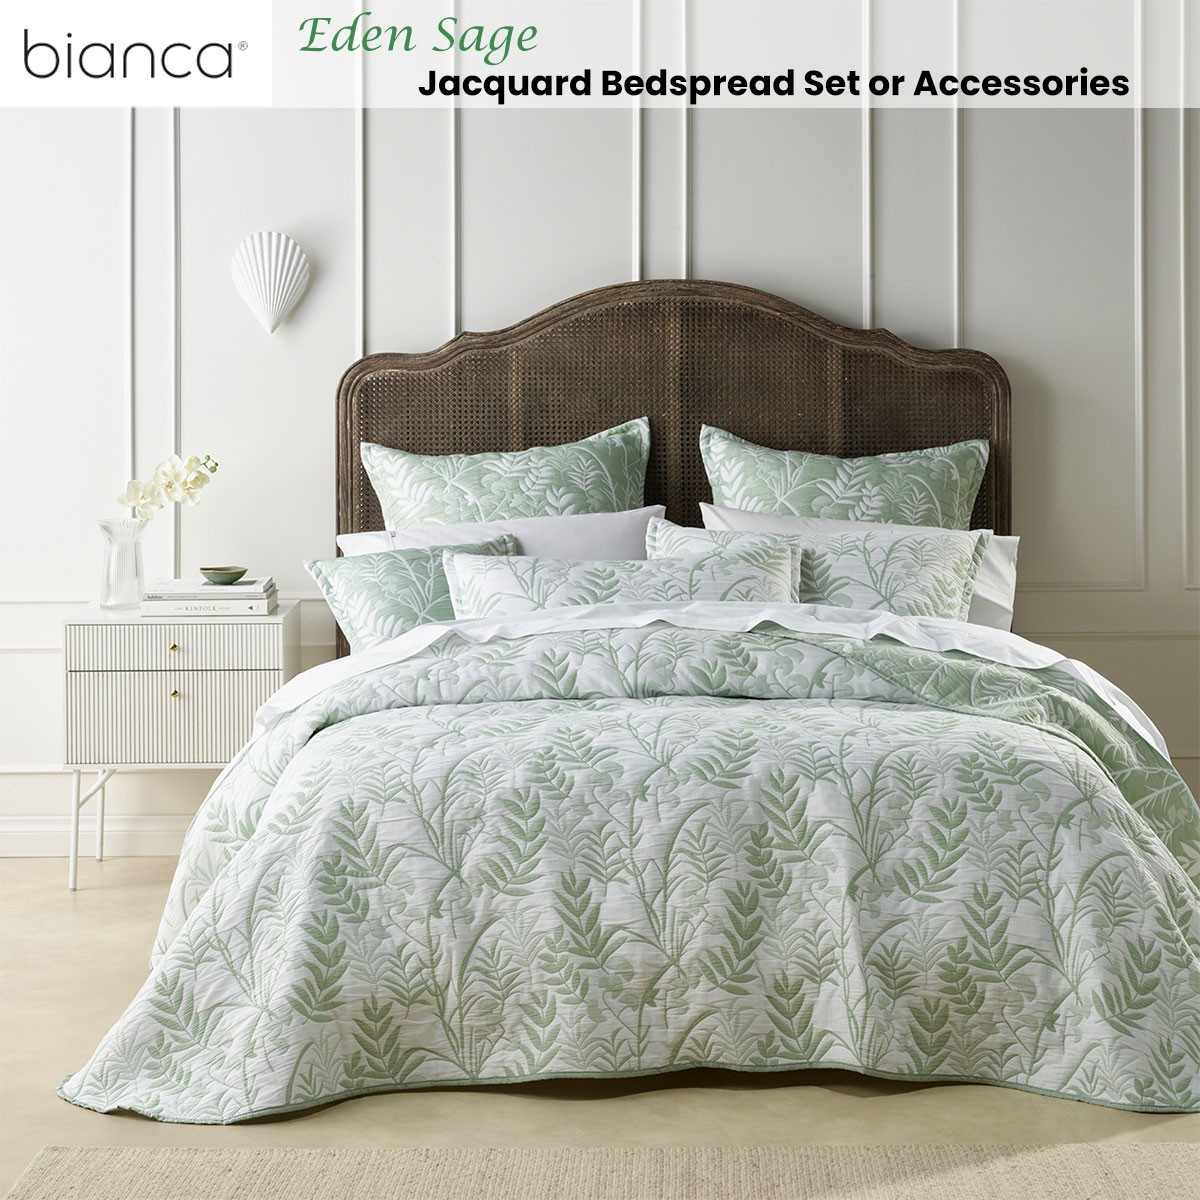 Eden Sage Jacquard Bedspread Set or Accessories by Bianca